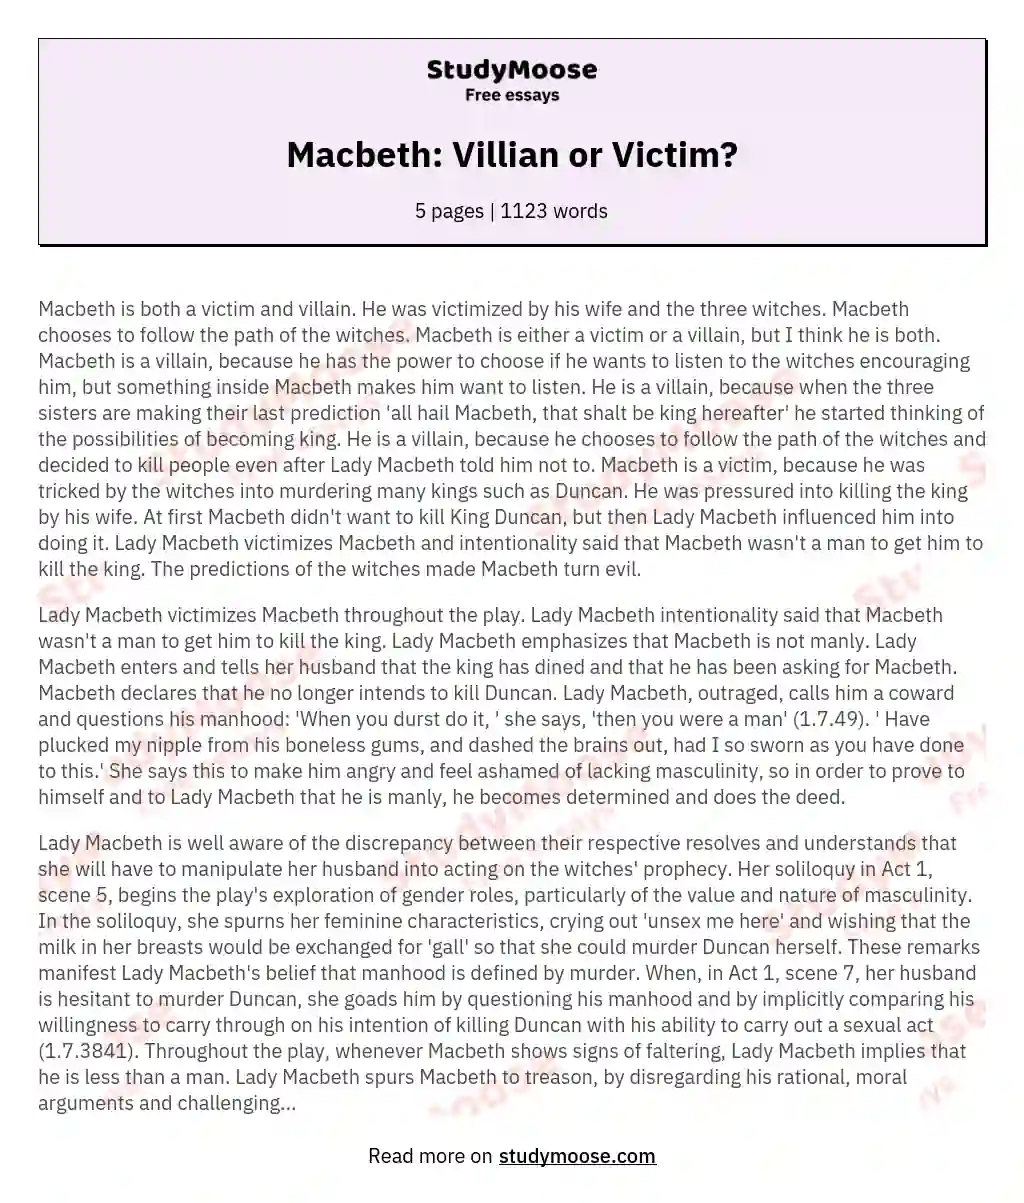 Macbeth: Villian or Victim?